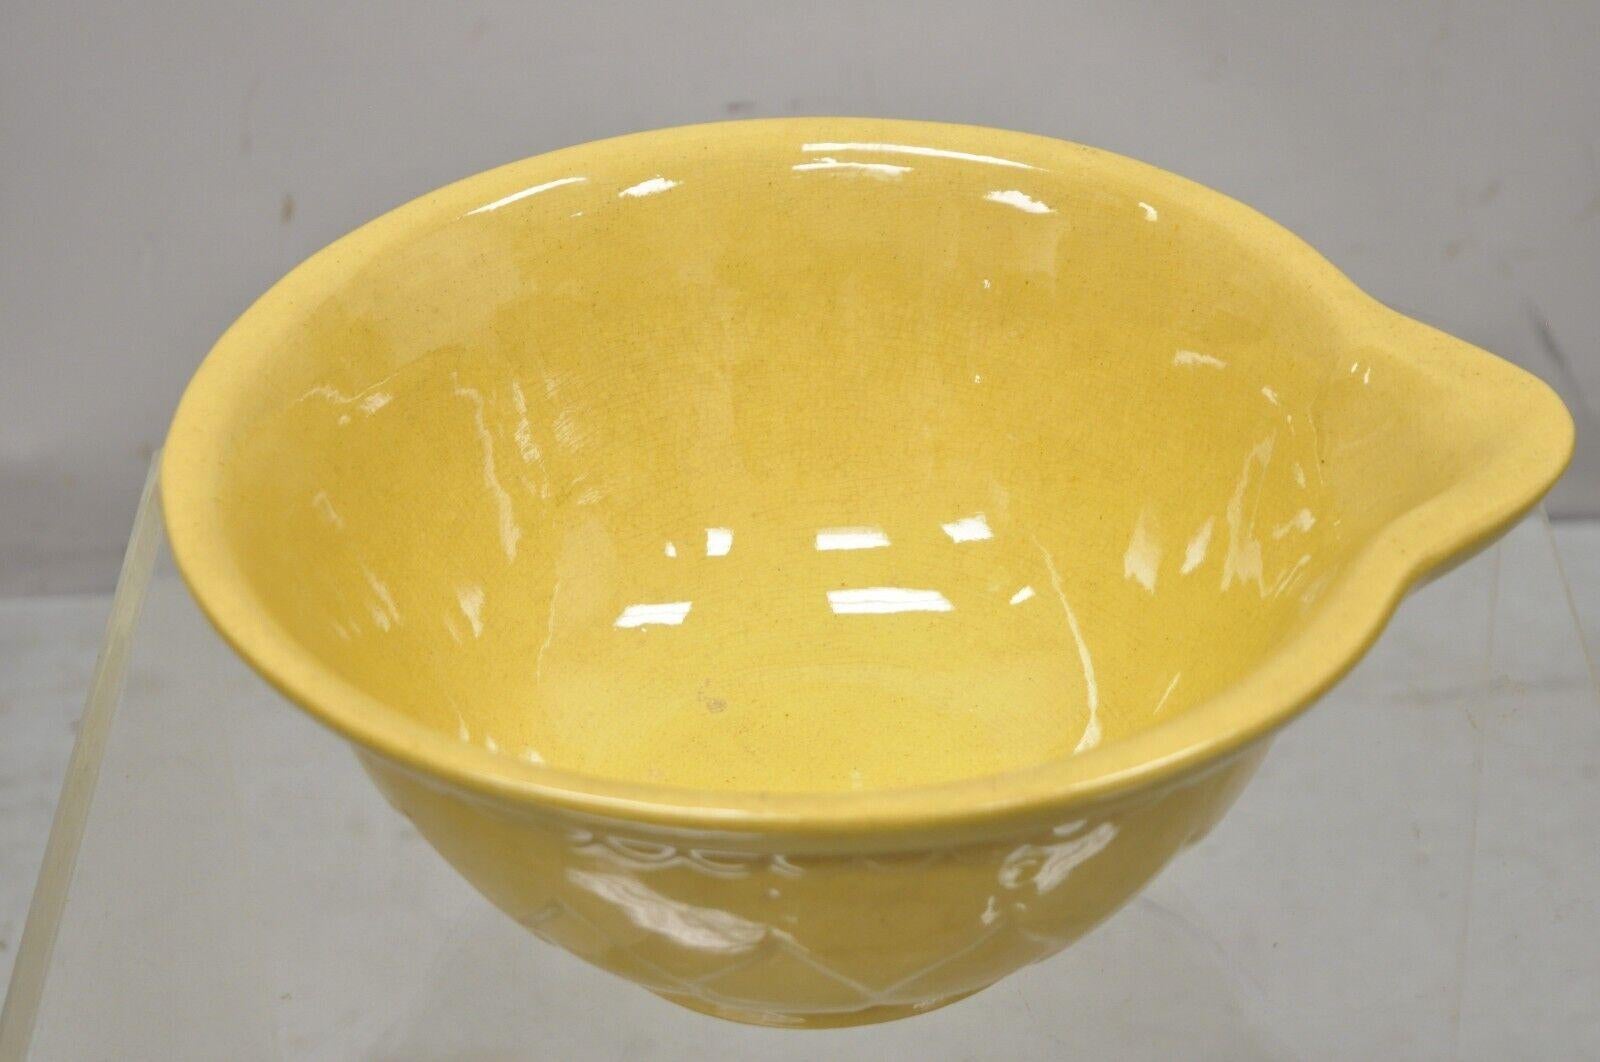 Antique American Provincial country primitive yellow pottery ceramic wash basin bowl. Circa 19th century. Measurements: 5